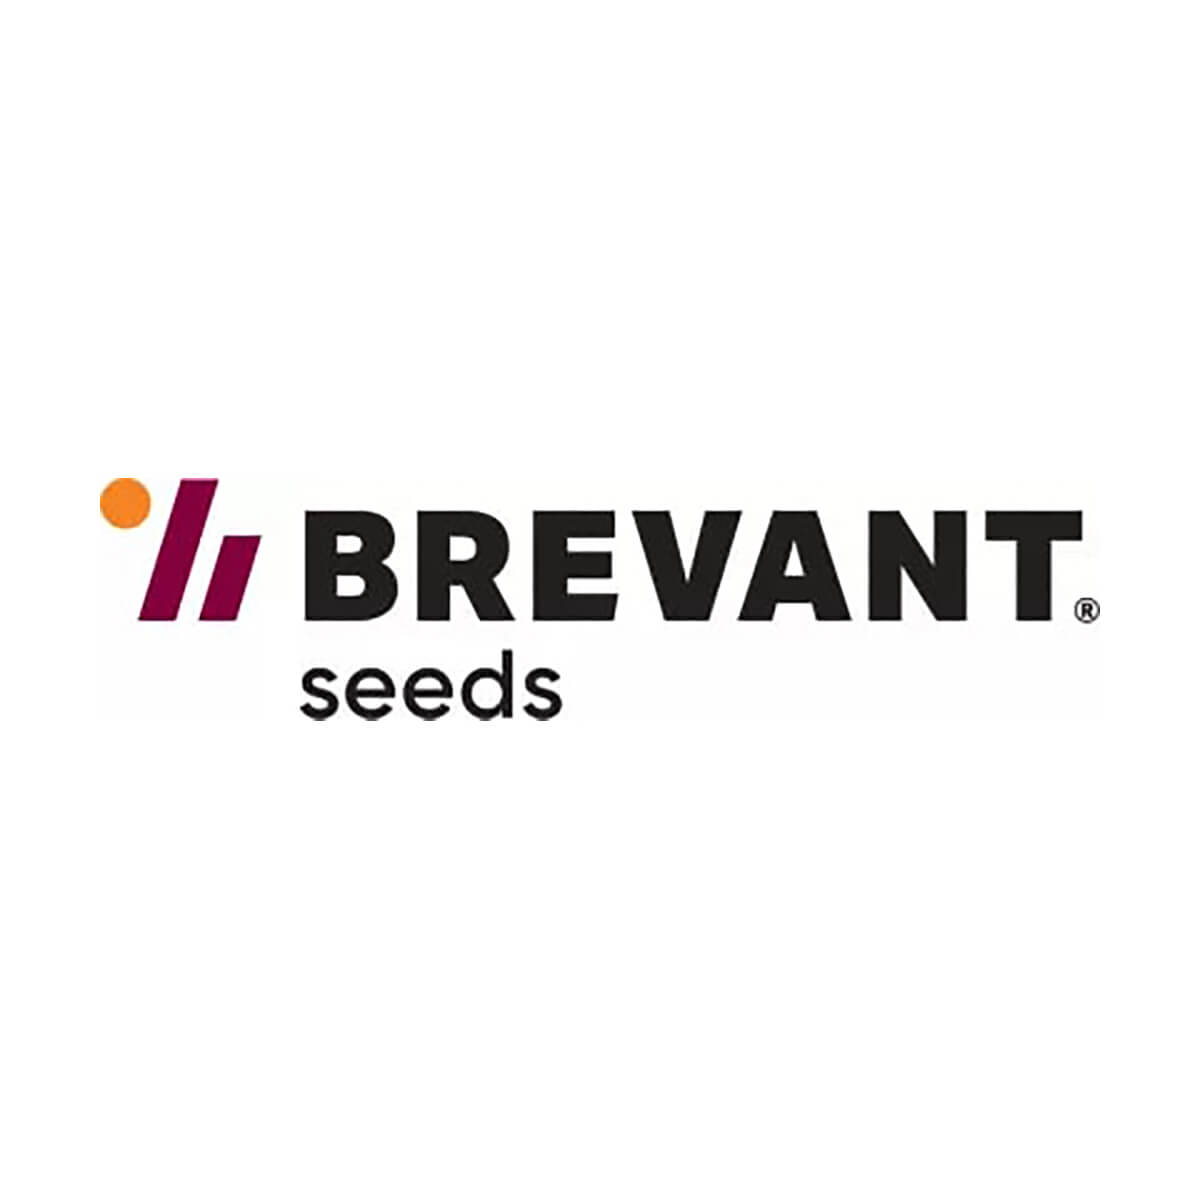 Brevant® seeds B3012